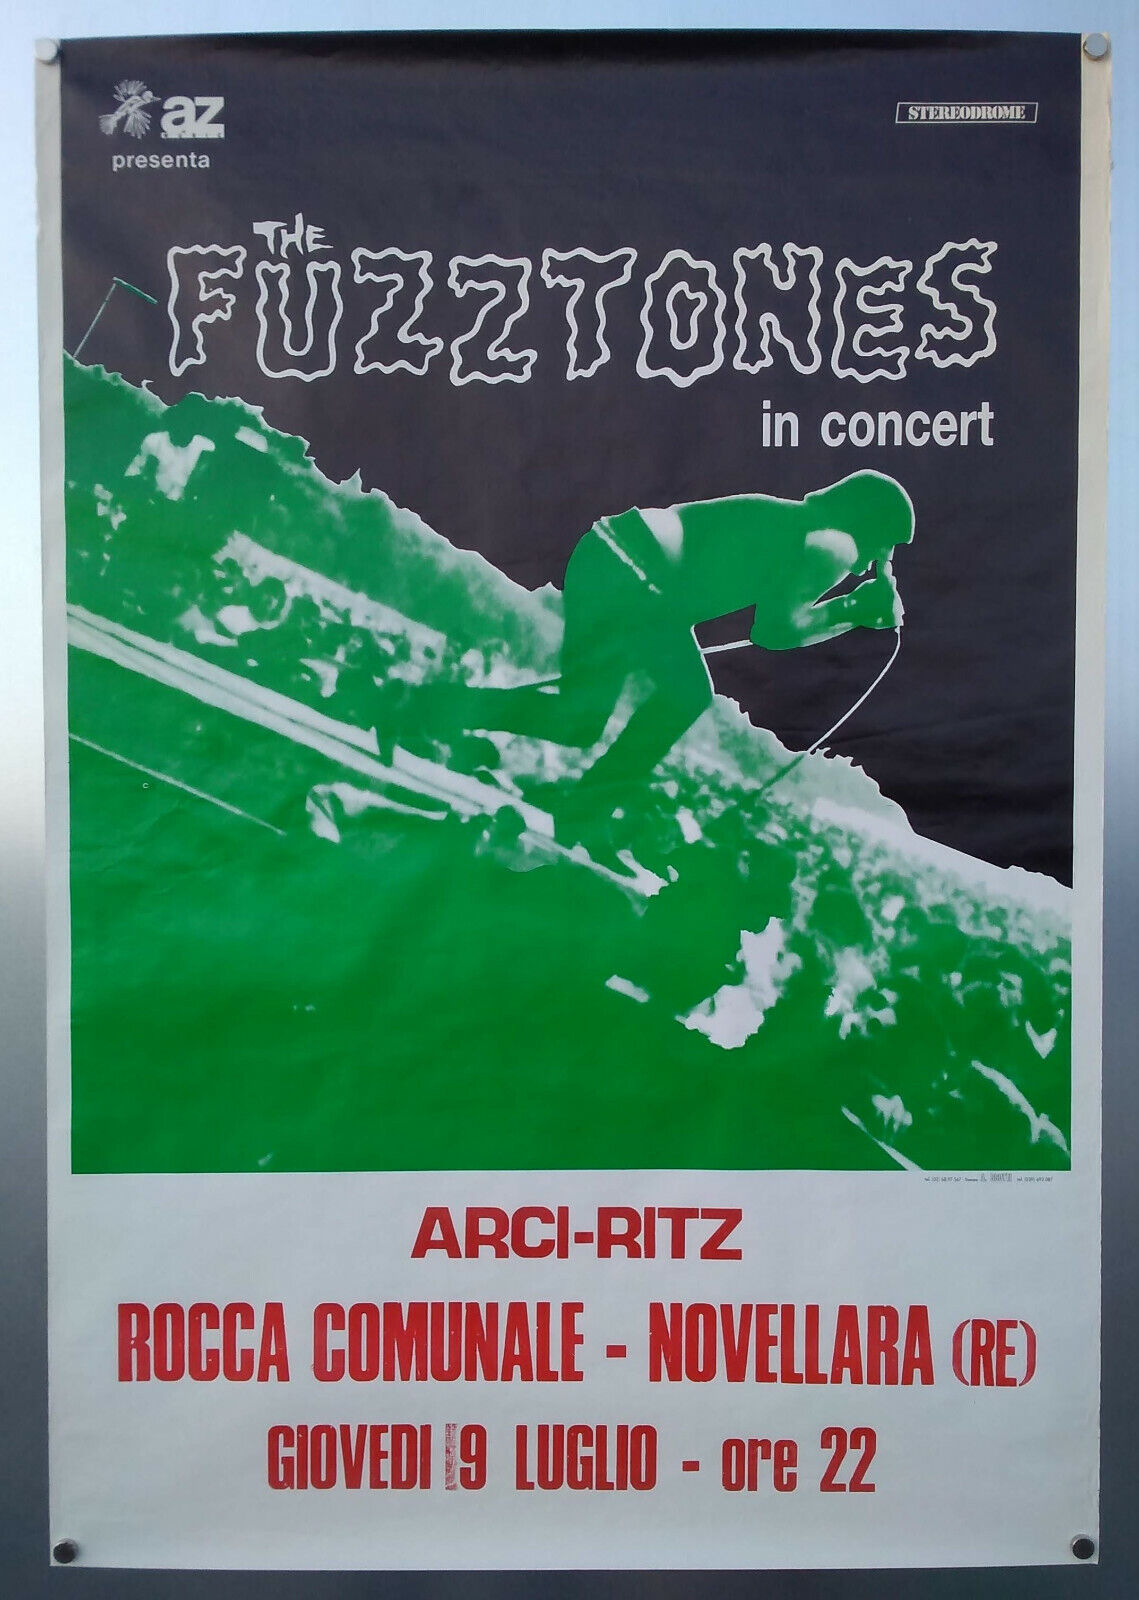 The Fuzztones Original Vintage Poster Italy Tour 80s Psych/garage-punk Novellara